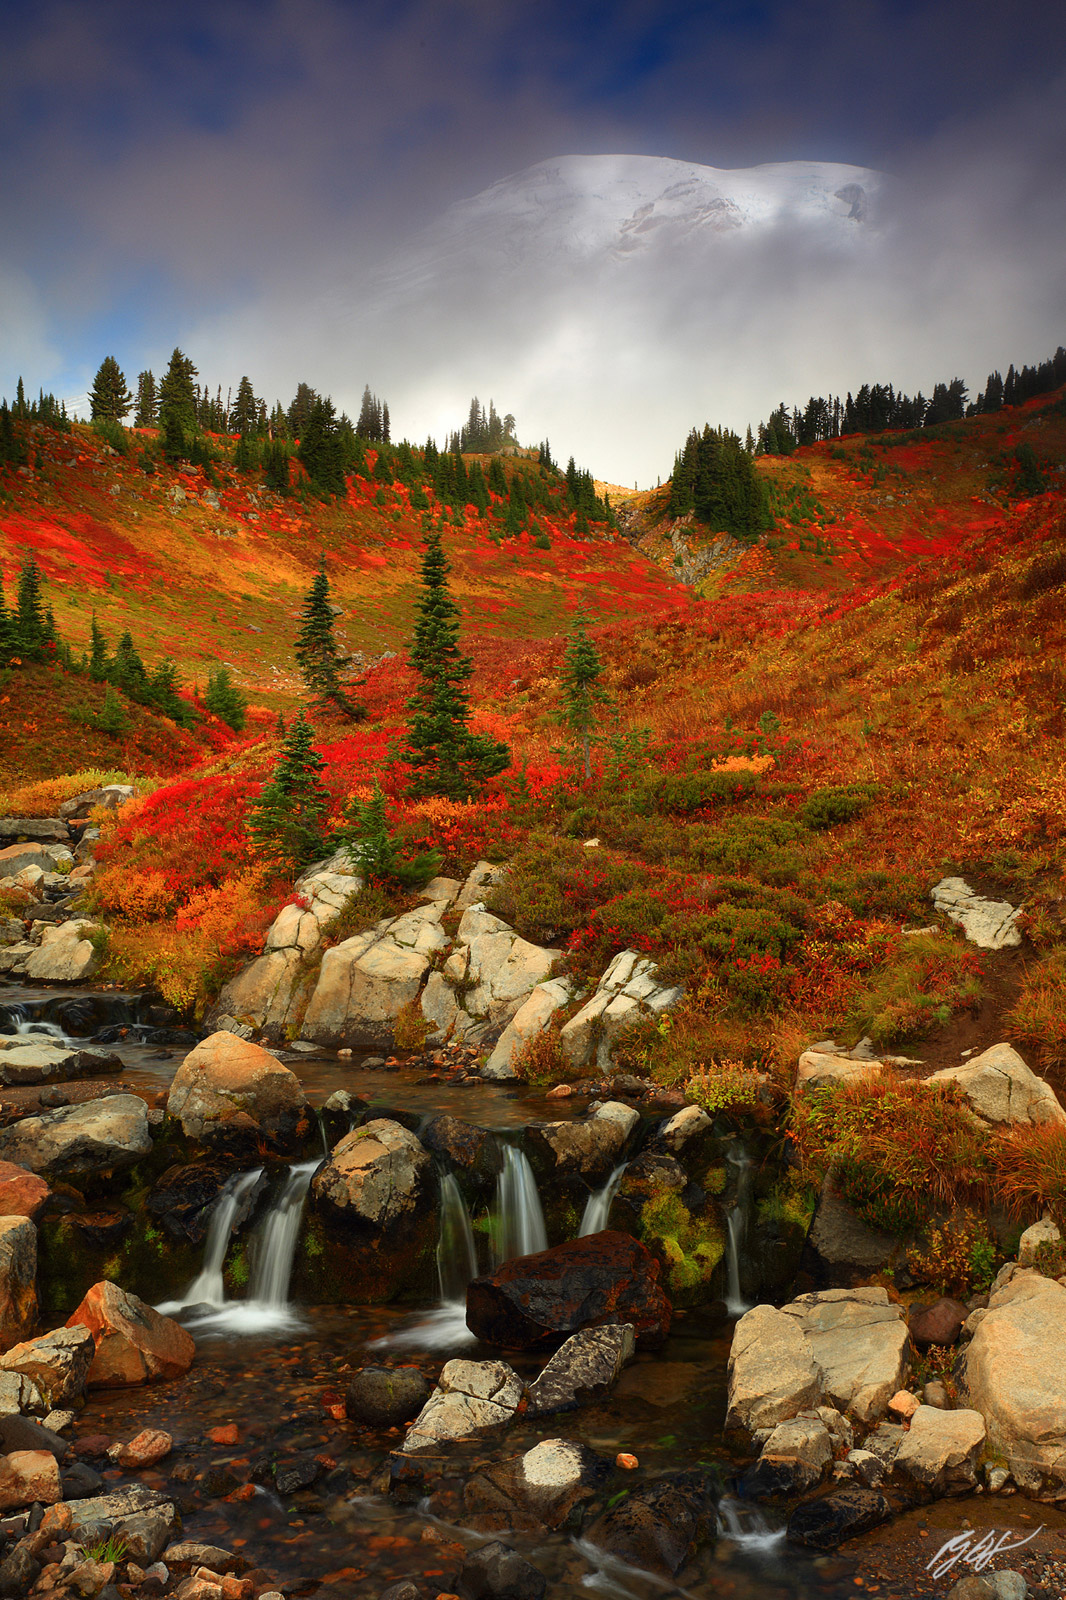 Fall Color Edith Creek and Mt Rainier from Mt Rainier National Park, in Washington